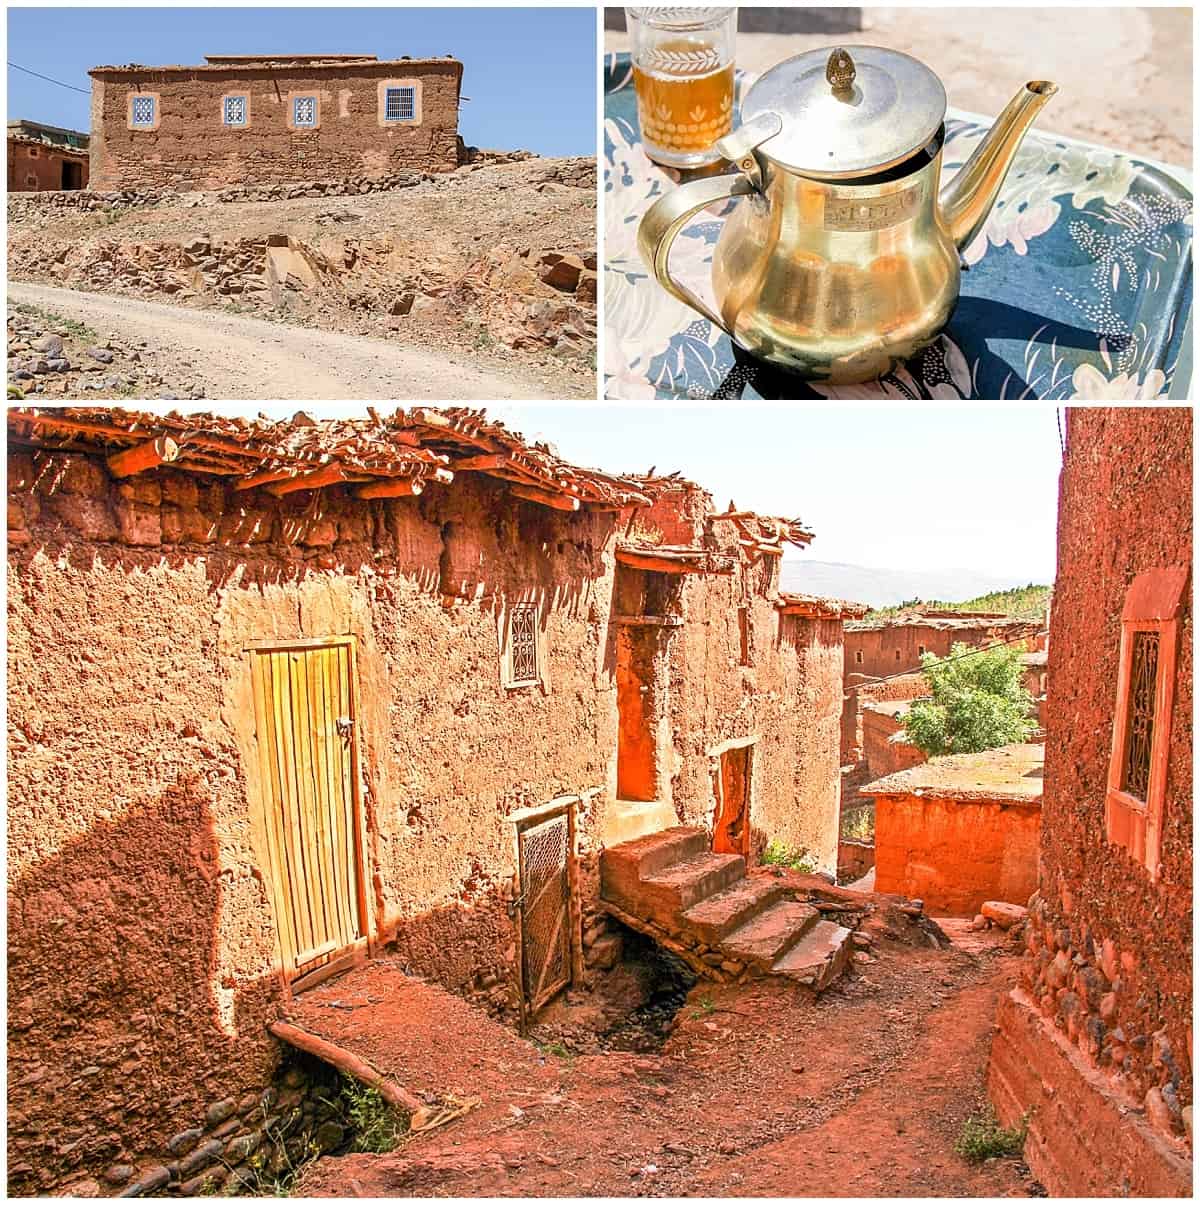 Morocco - Toubkal National Park - Ouirgane Village - Berber Village street scenes